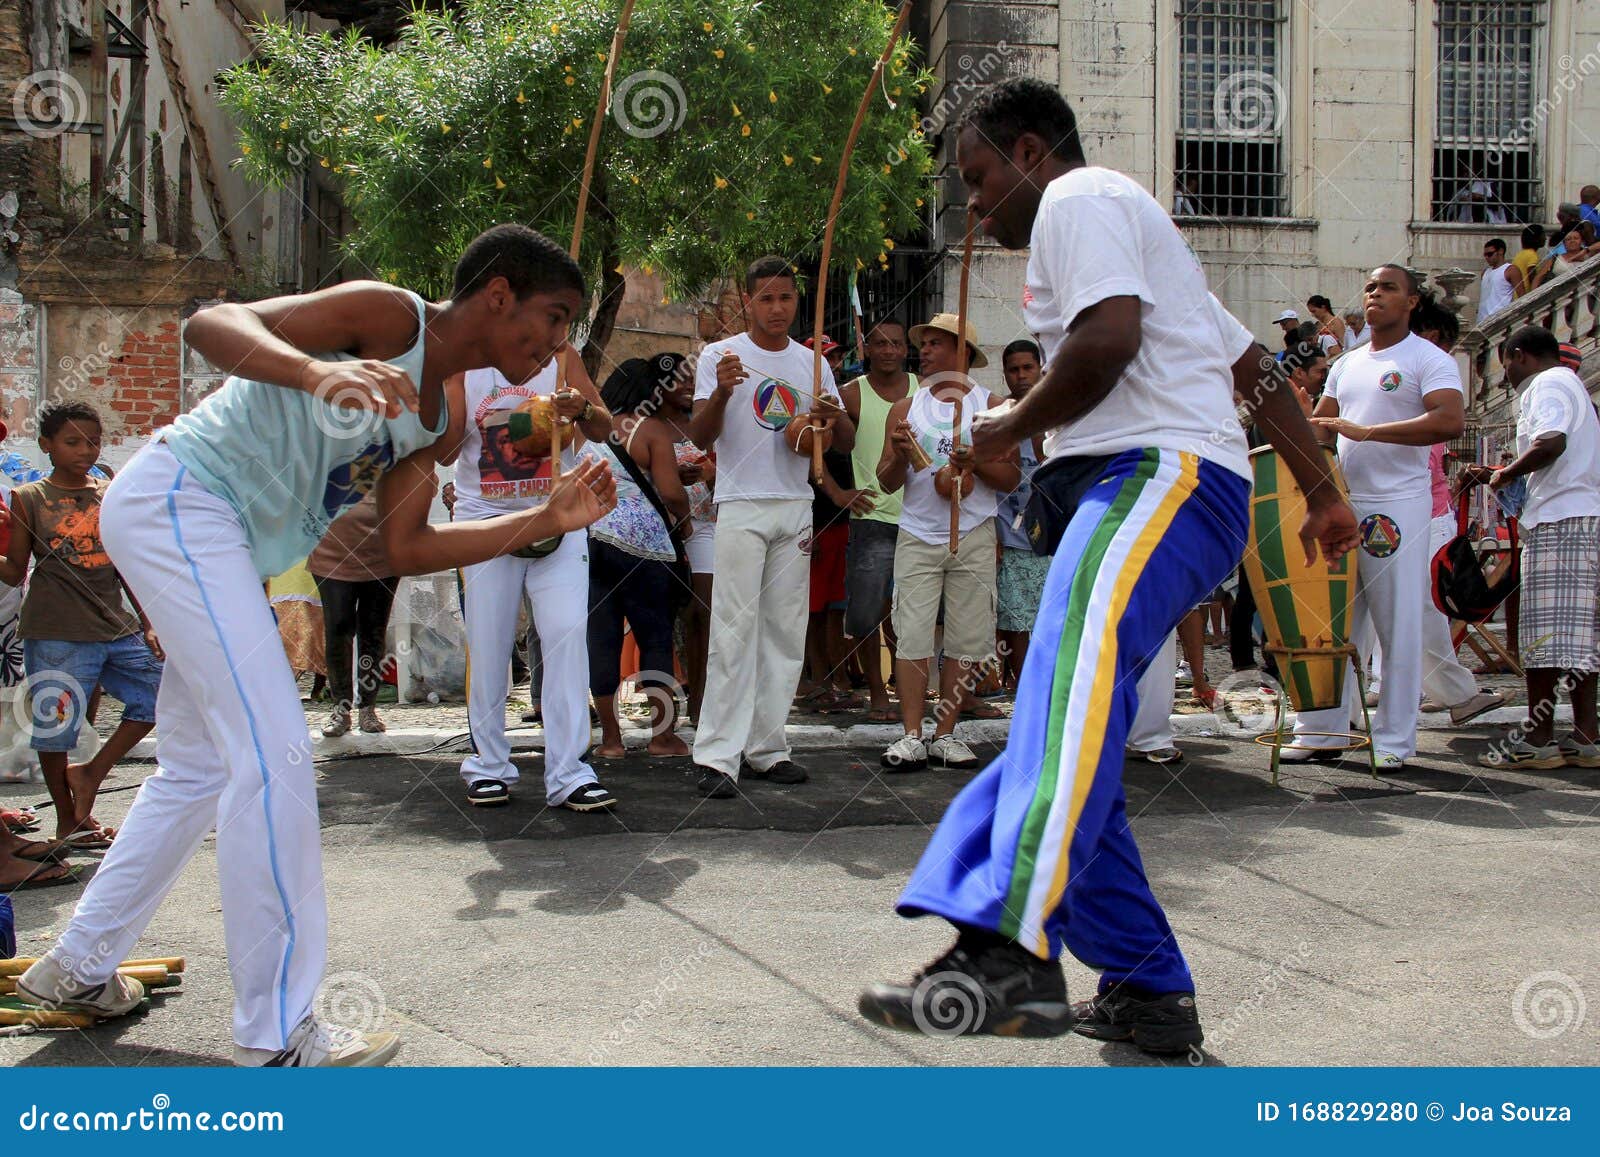 Capoeira Presentation in Salvador Editorial Image - Image of grass ...